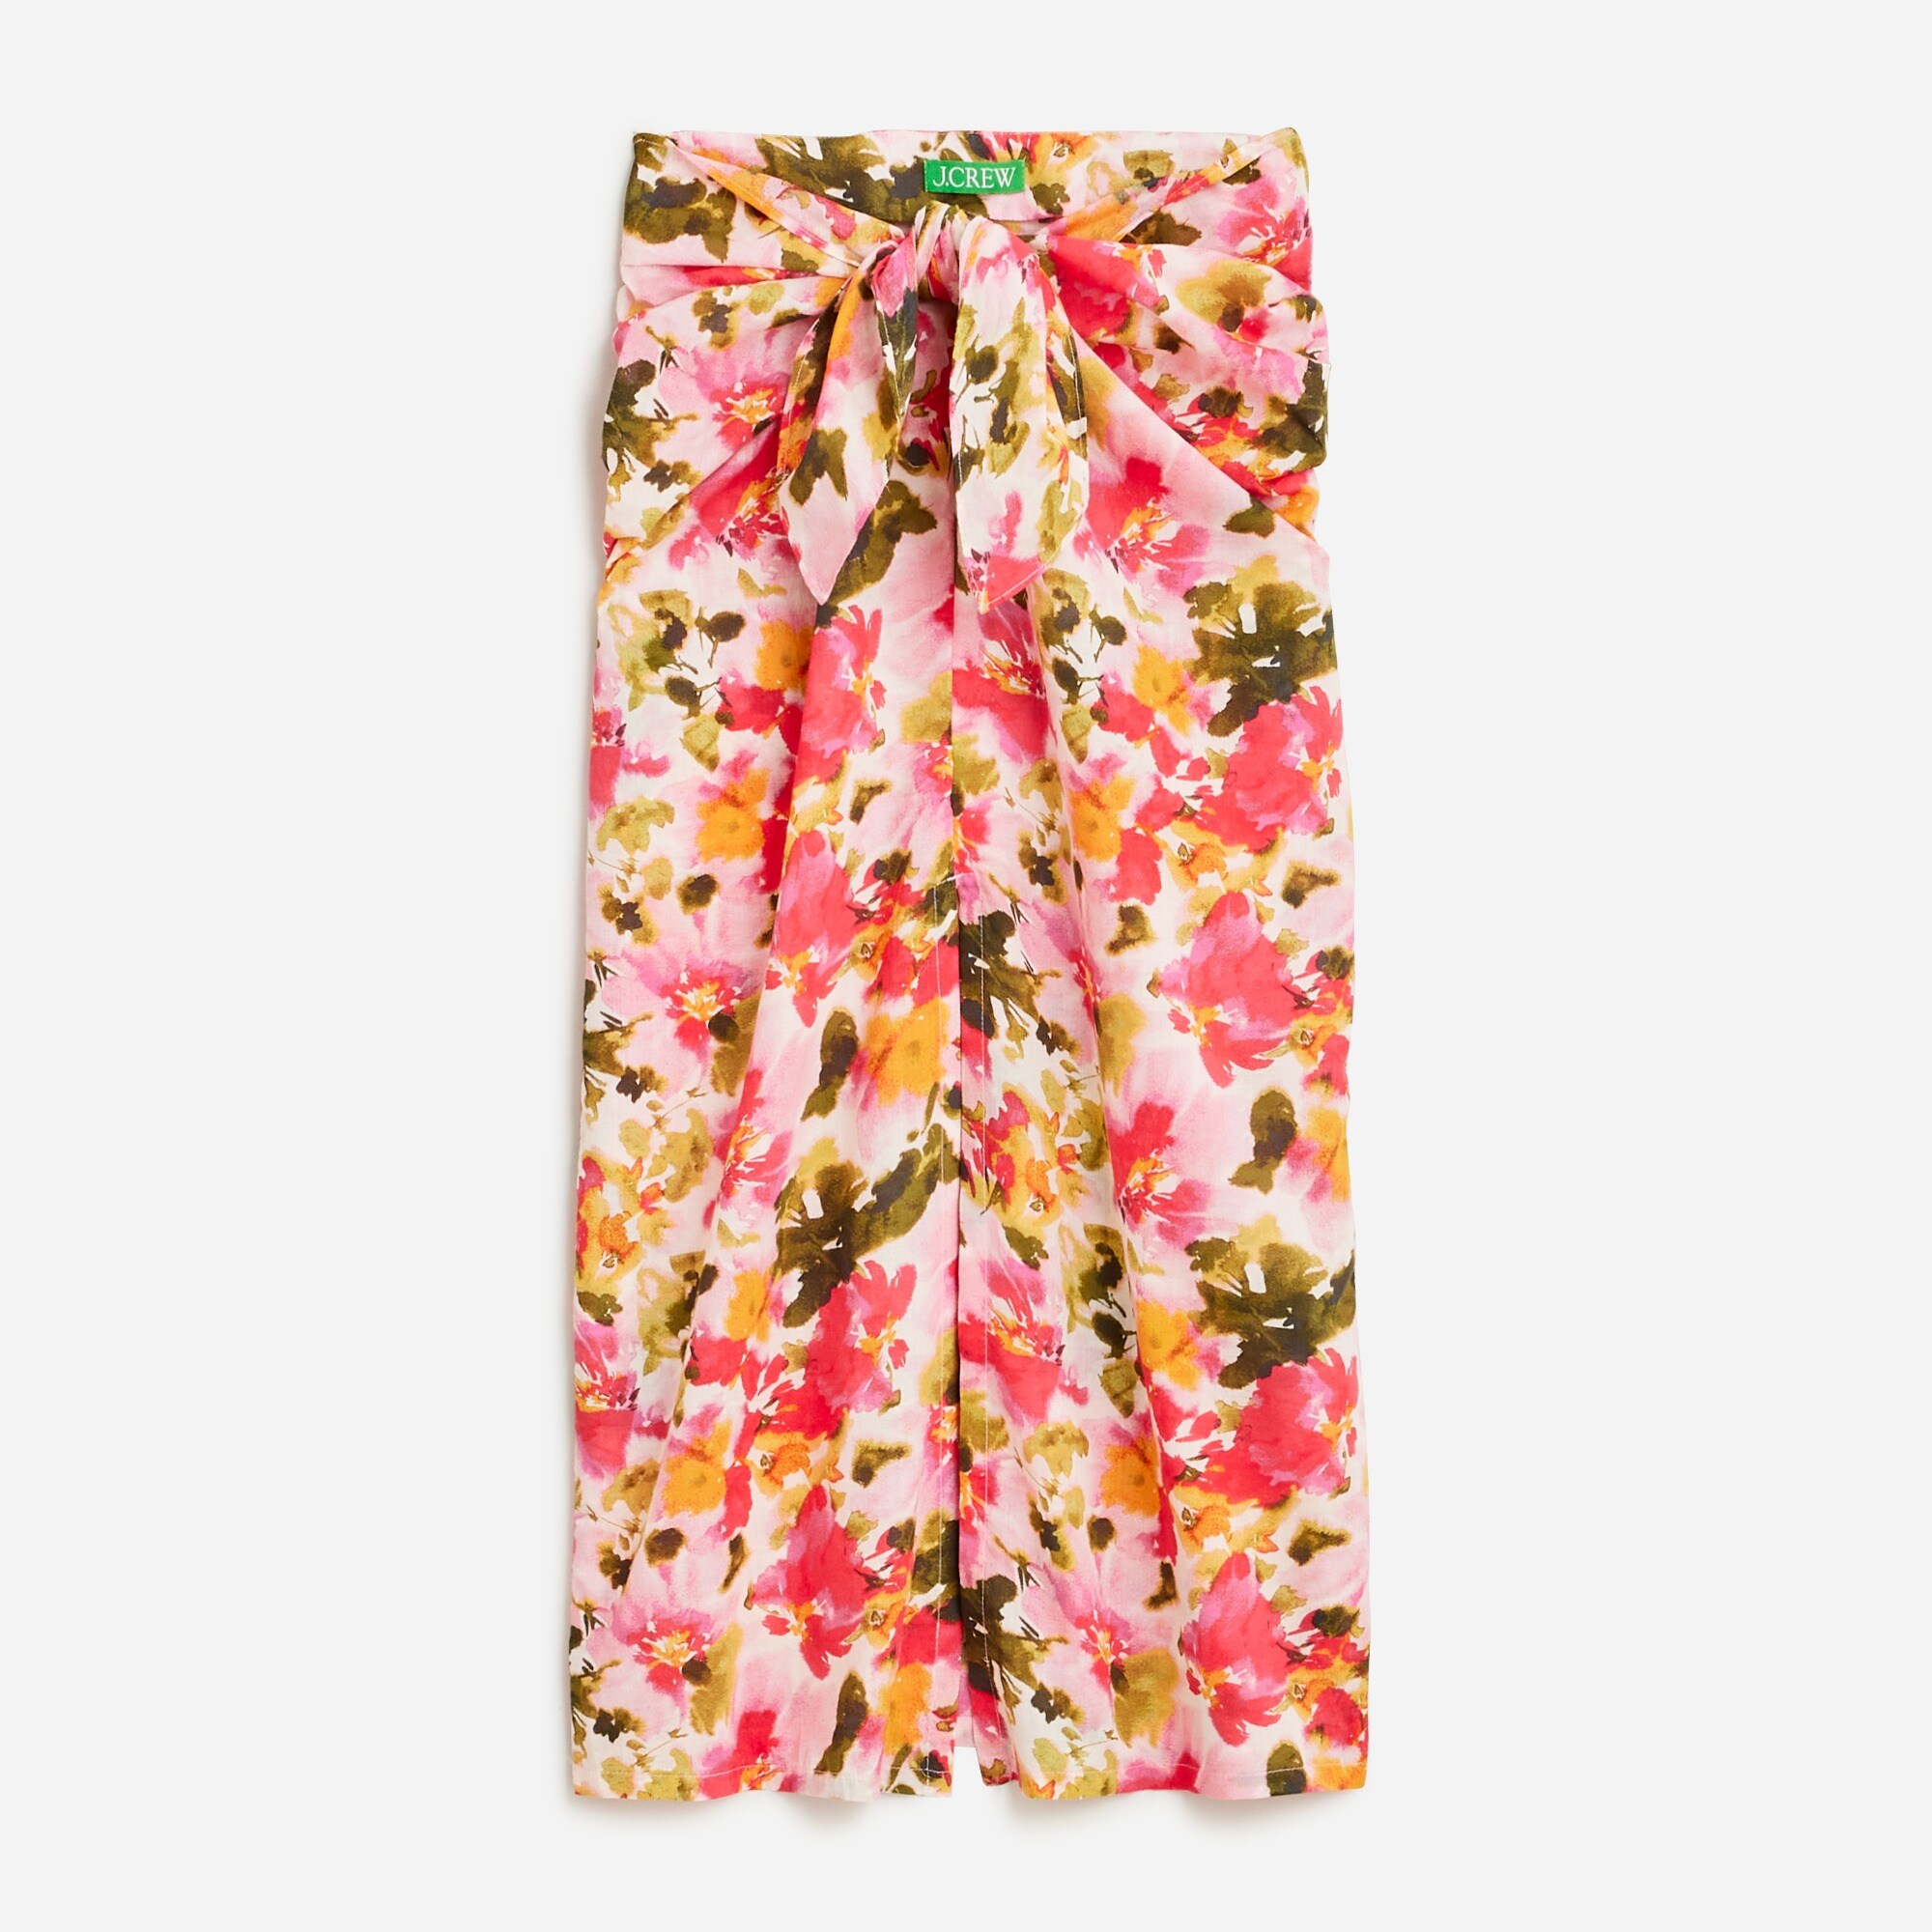  Convertible beach sarong in floral cotton voile